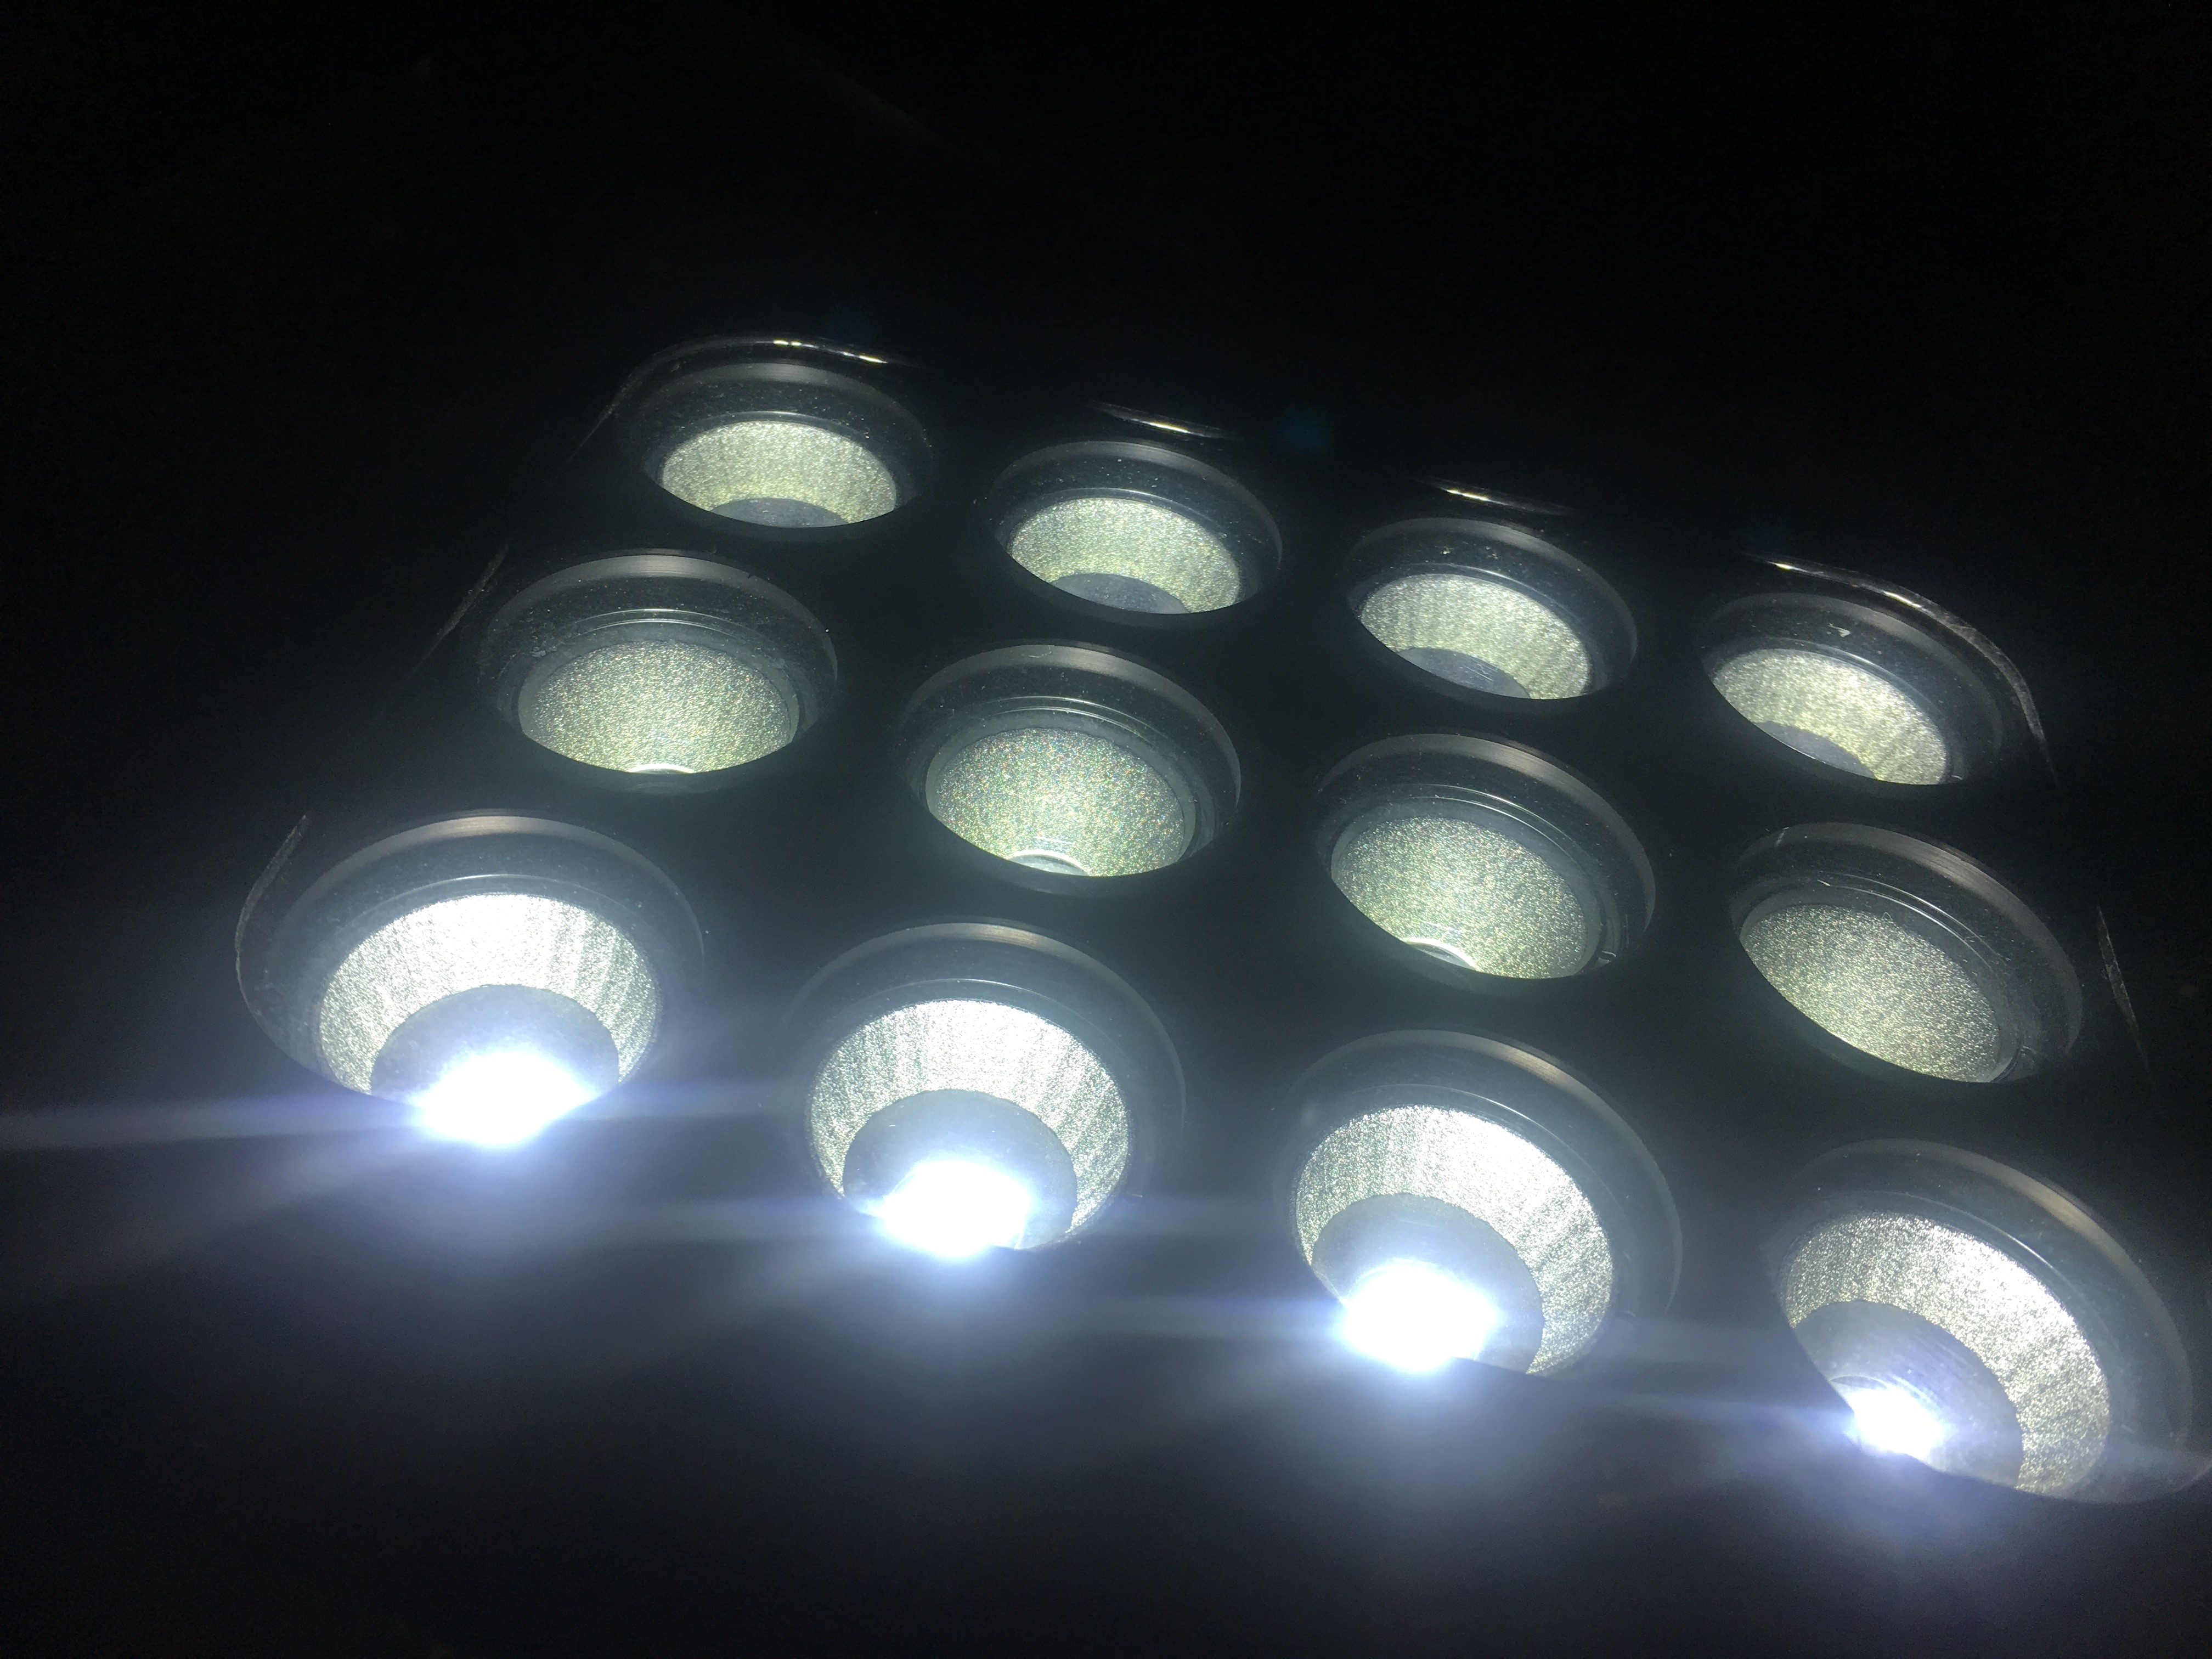 Lux, lumens, watt and kelvin 28.06.19